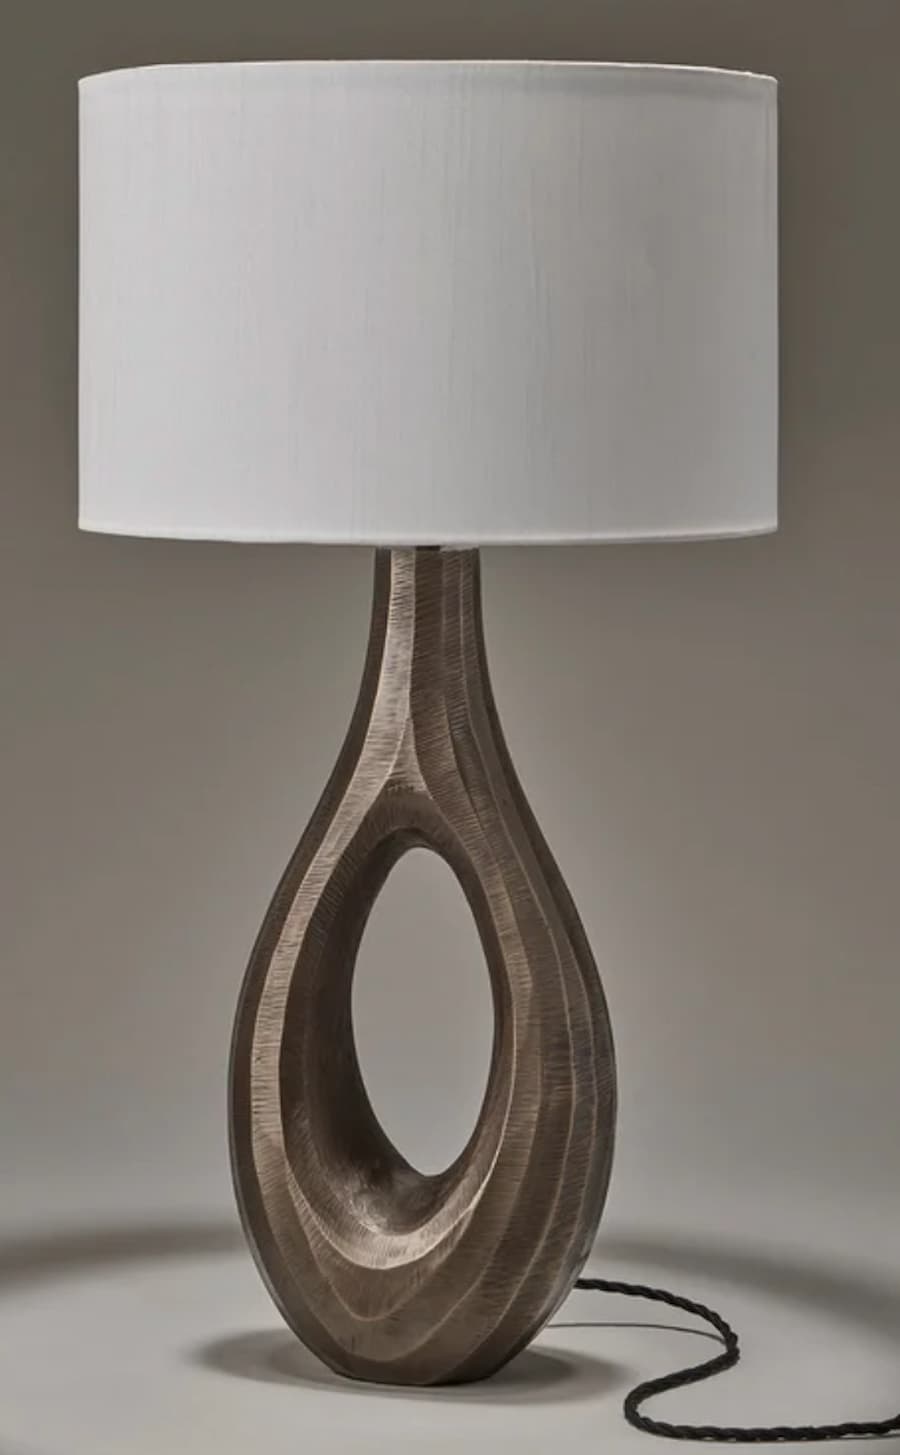 Industville Ornate Ellipse Table Lamp: